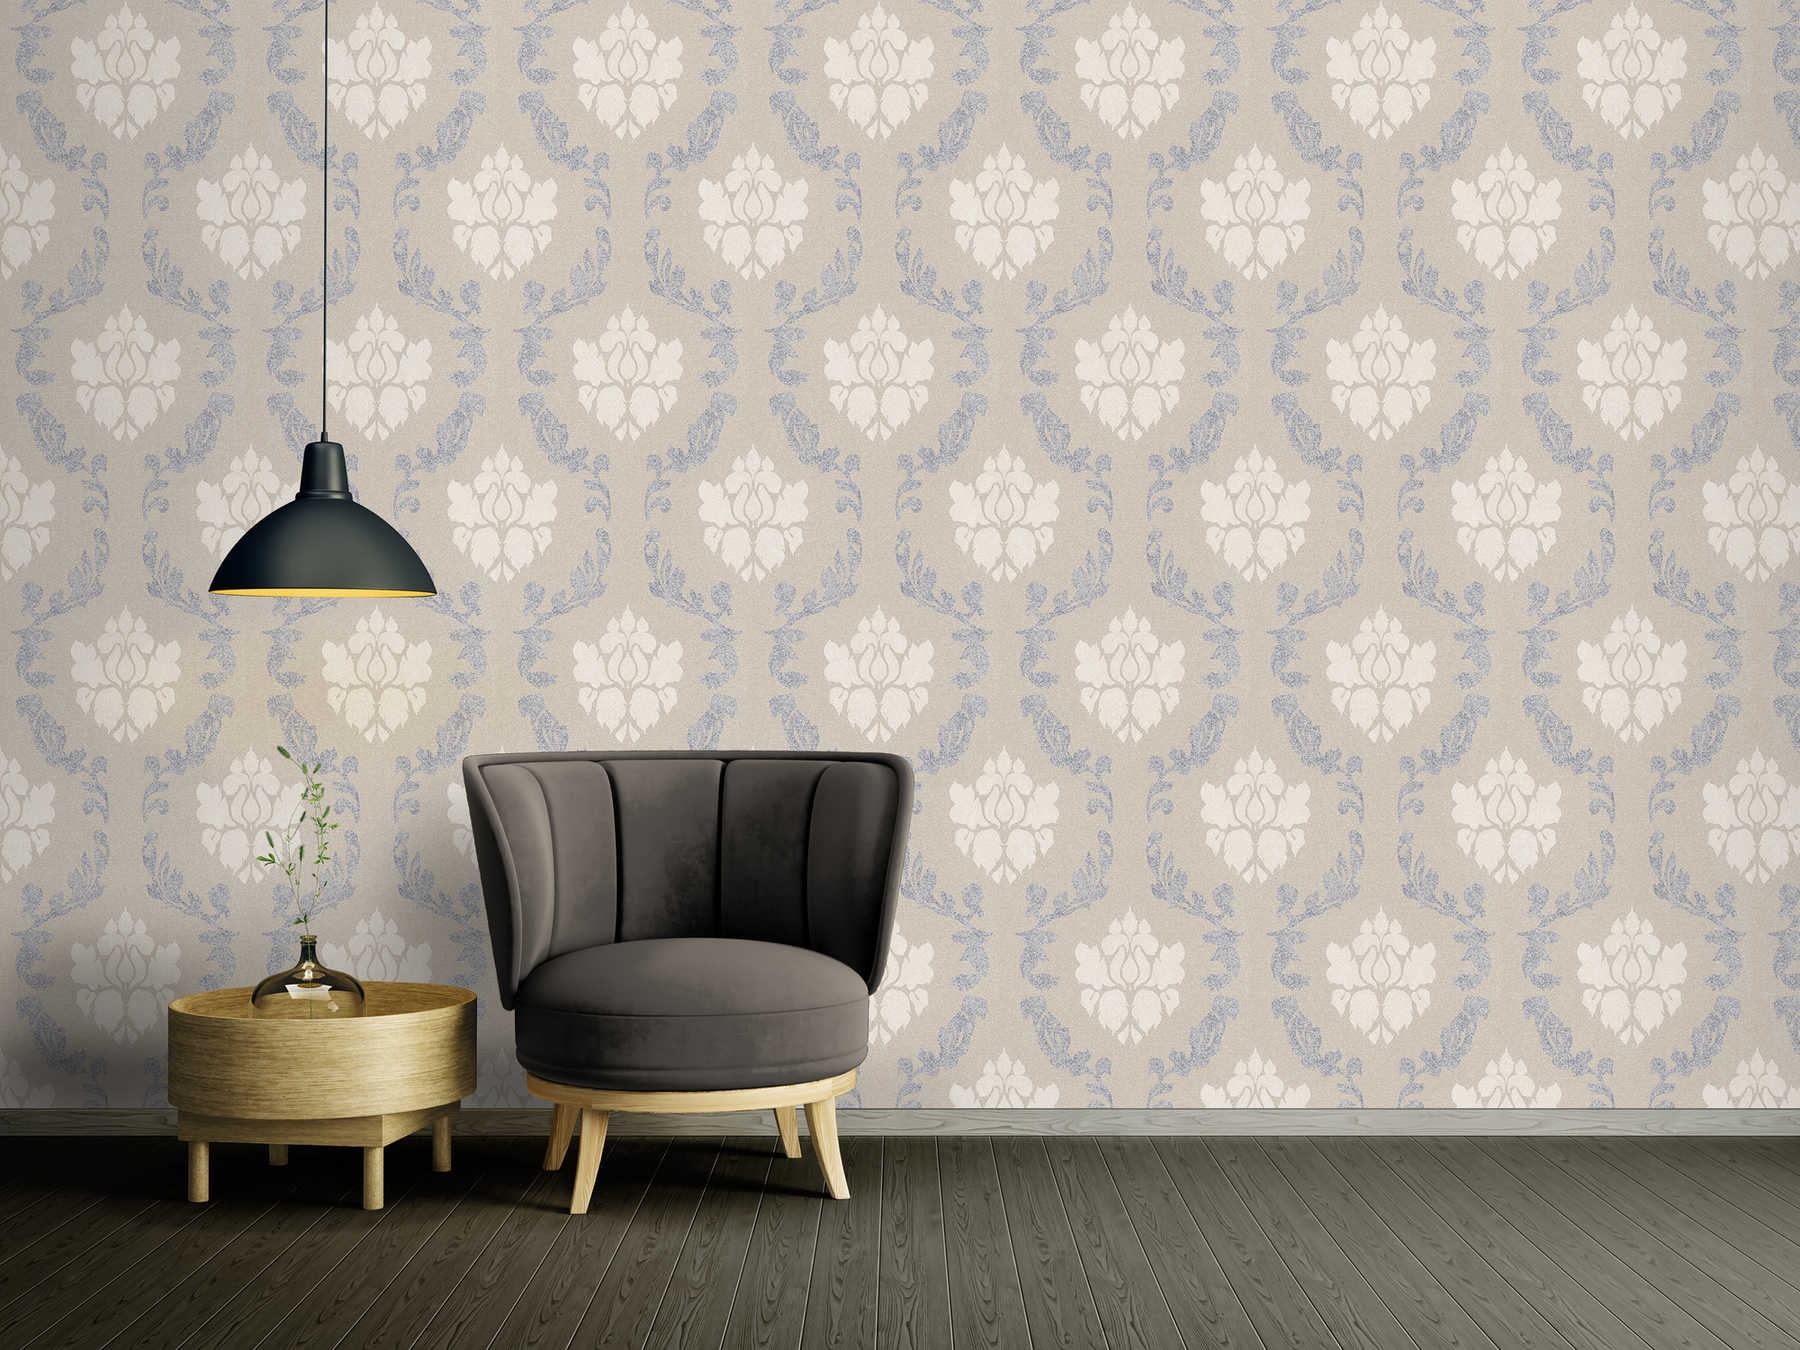             Ornament wallpaper with linen look - beige, cream, blue
        